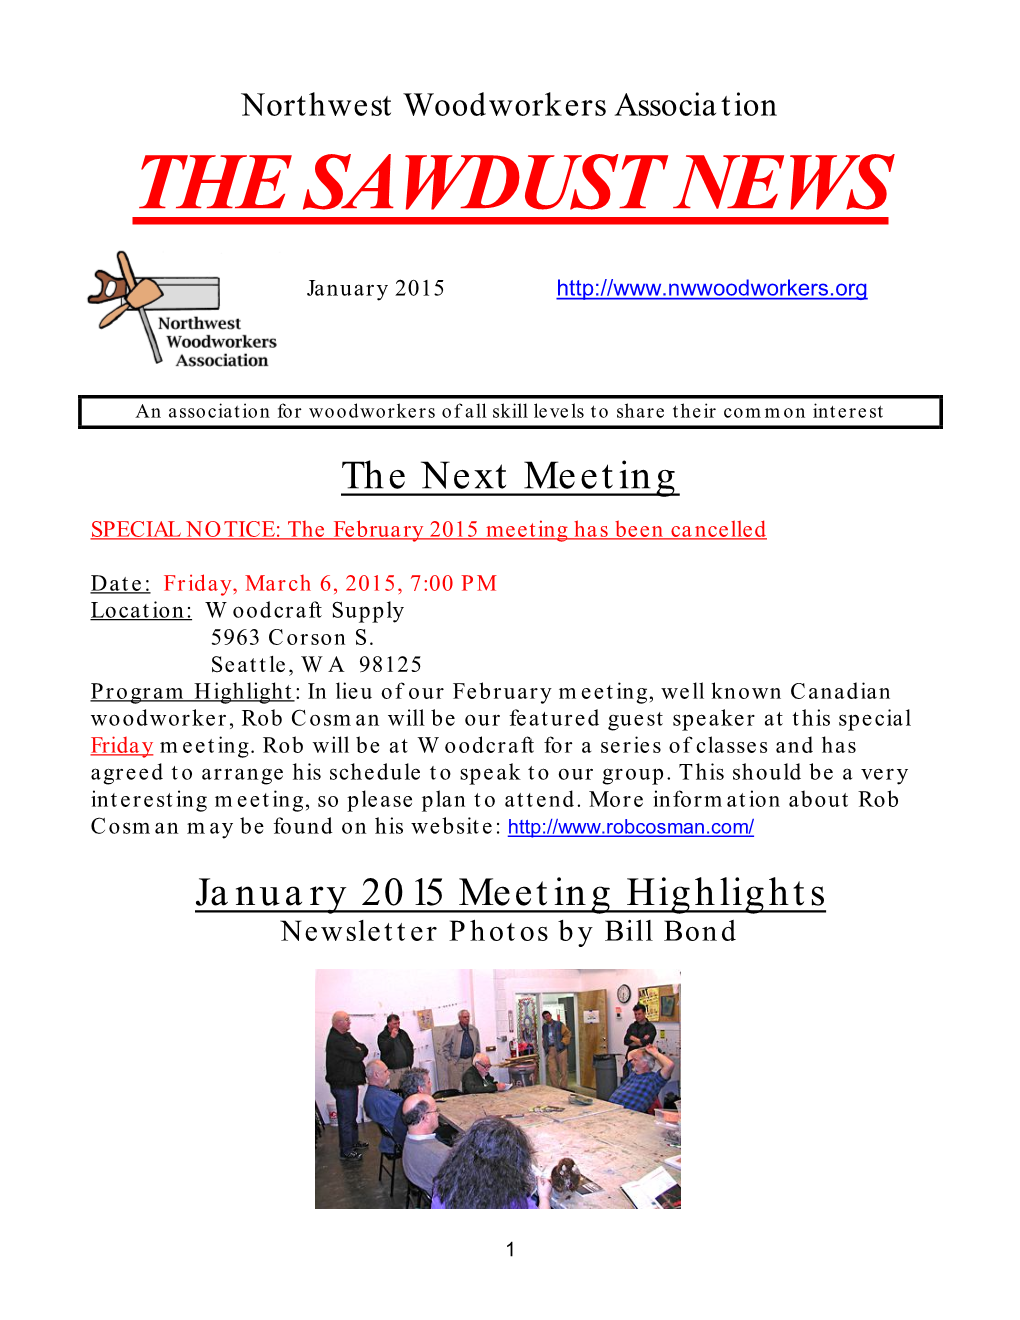 The Sawdust News